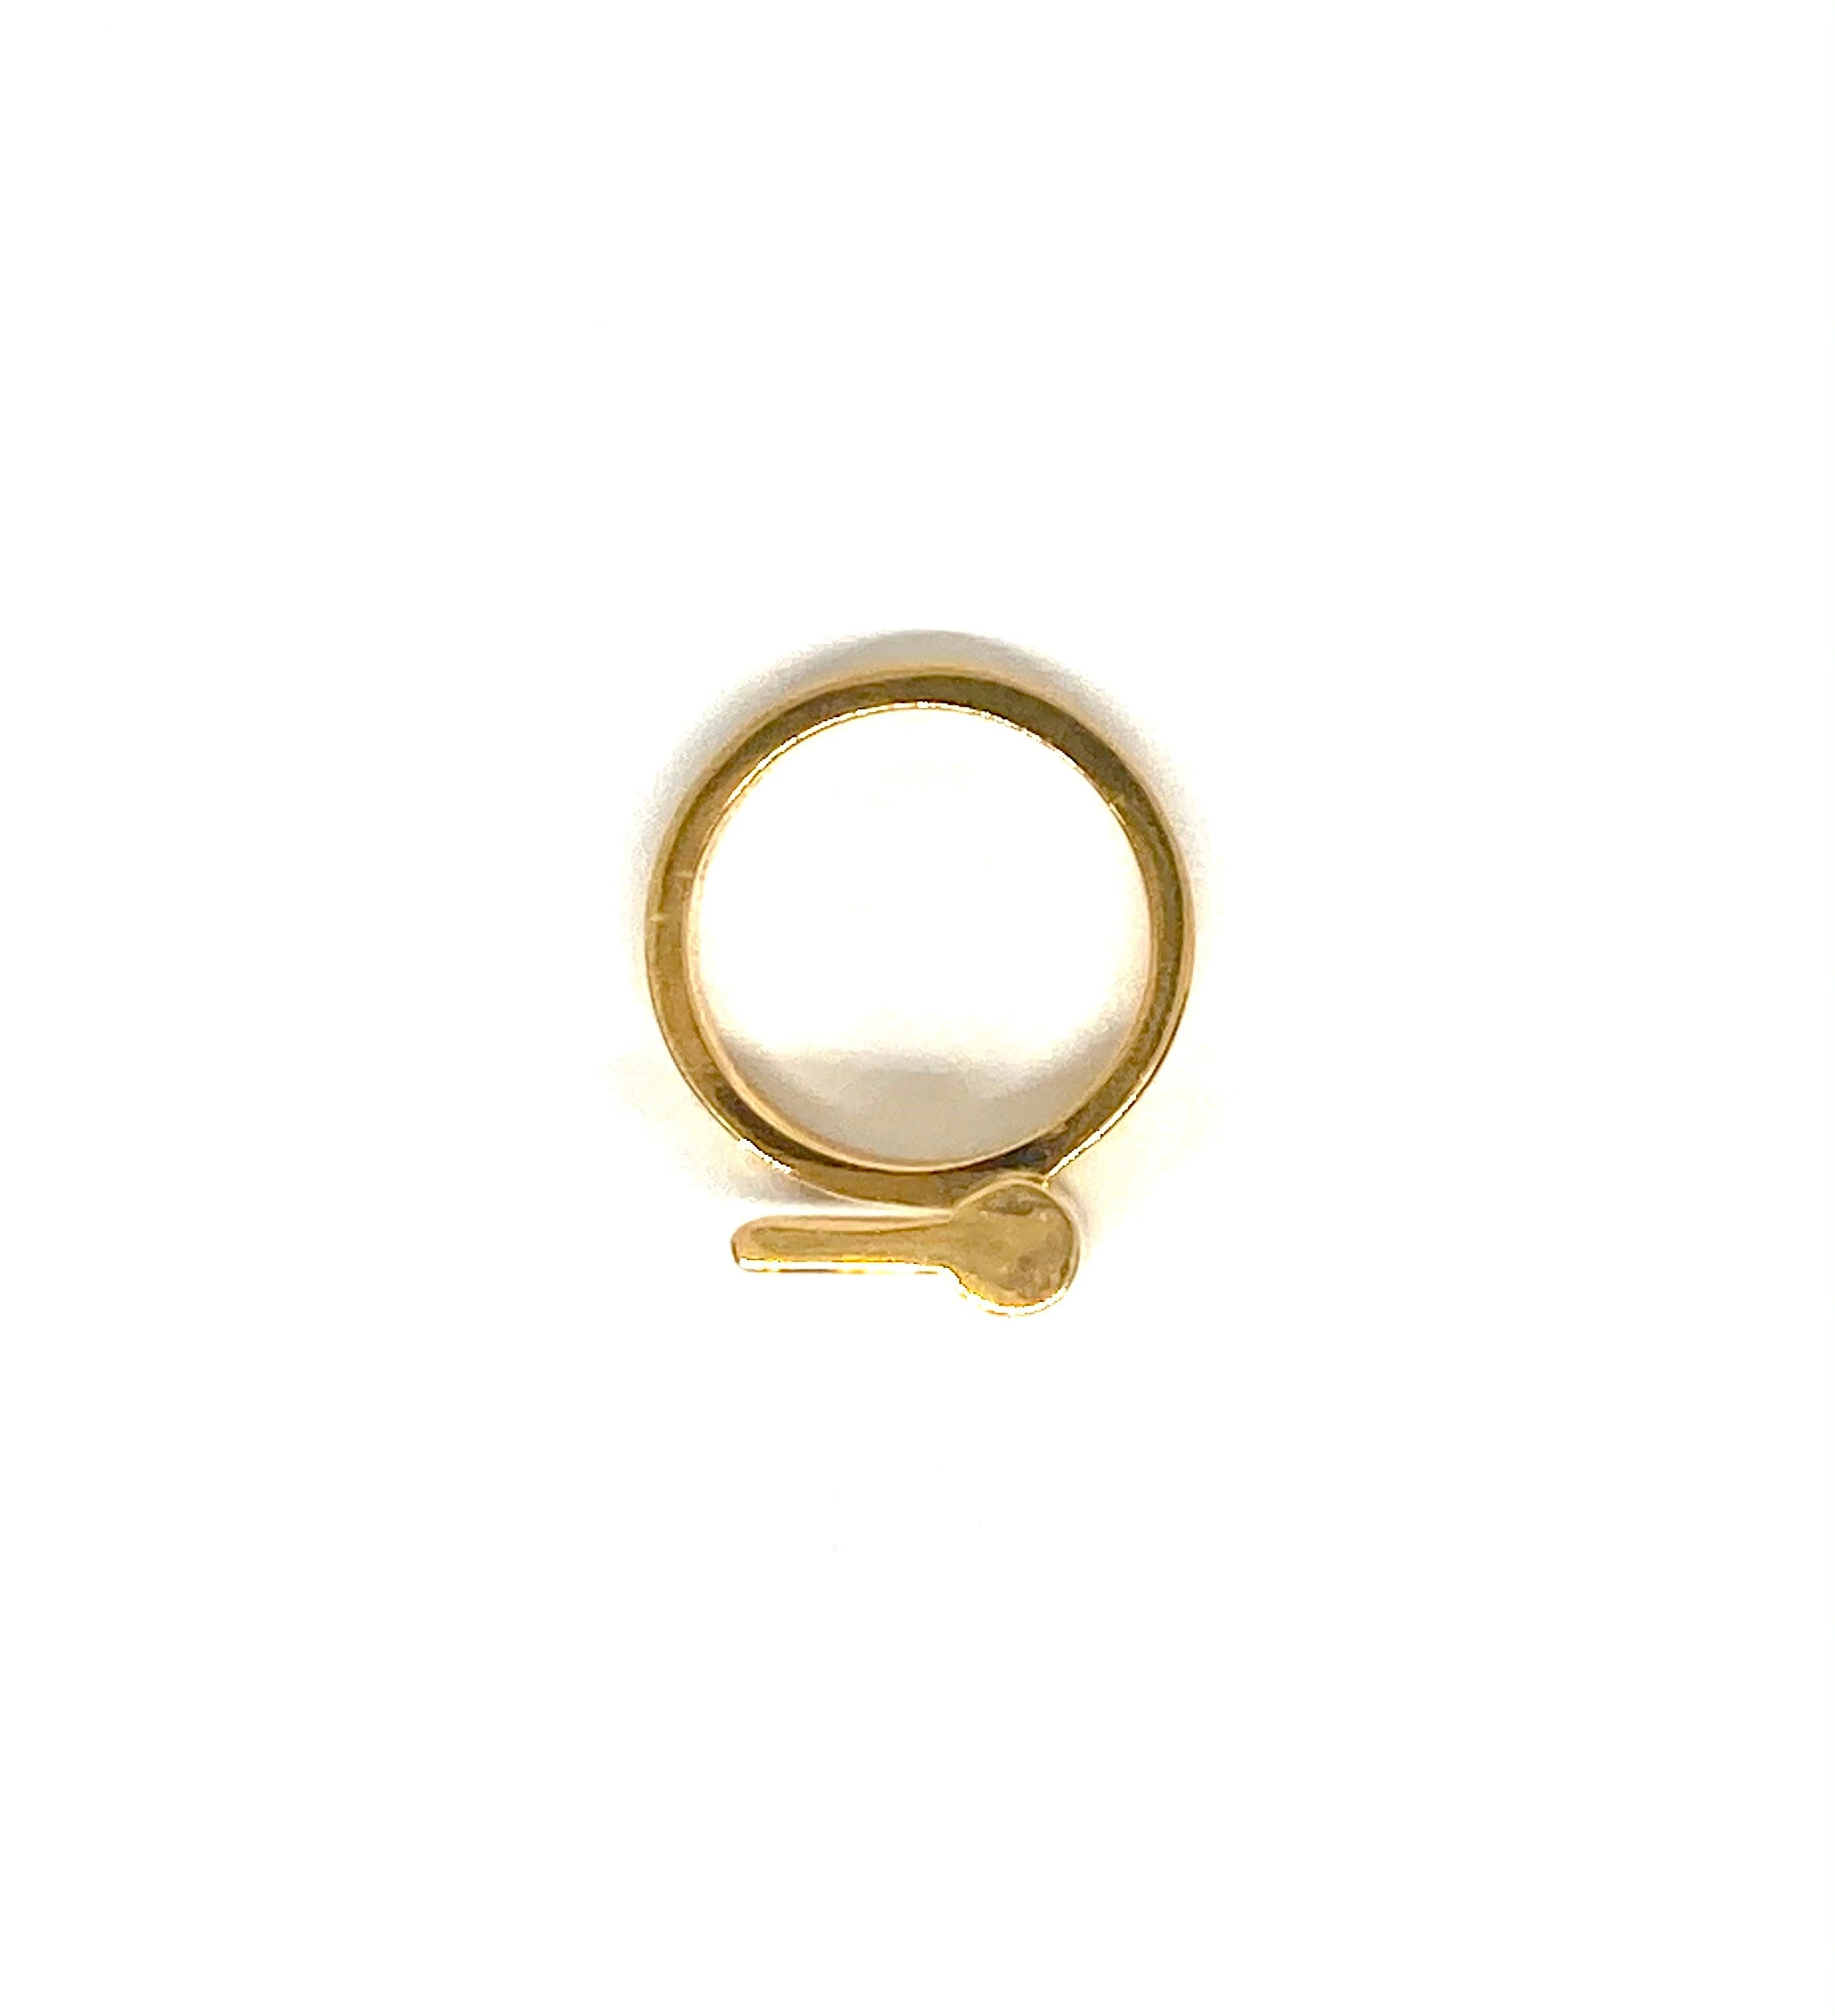 For Sale:  22 Karat Gold Key Ring 5